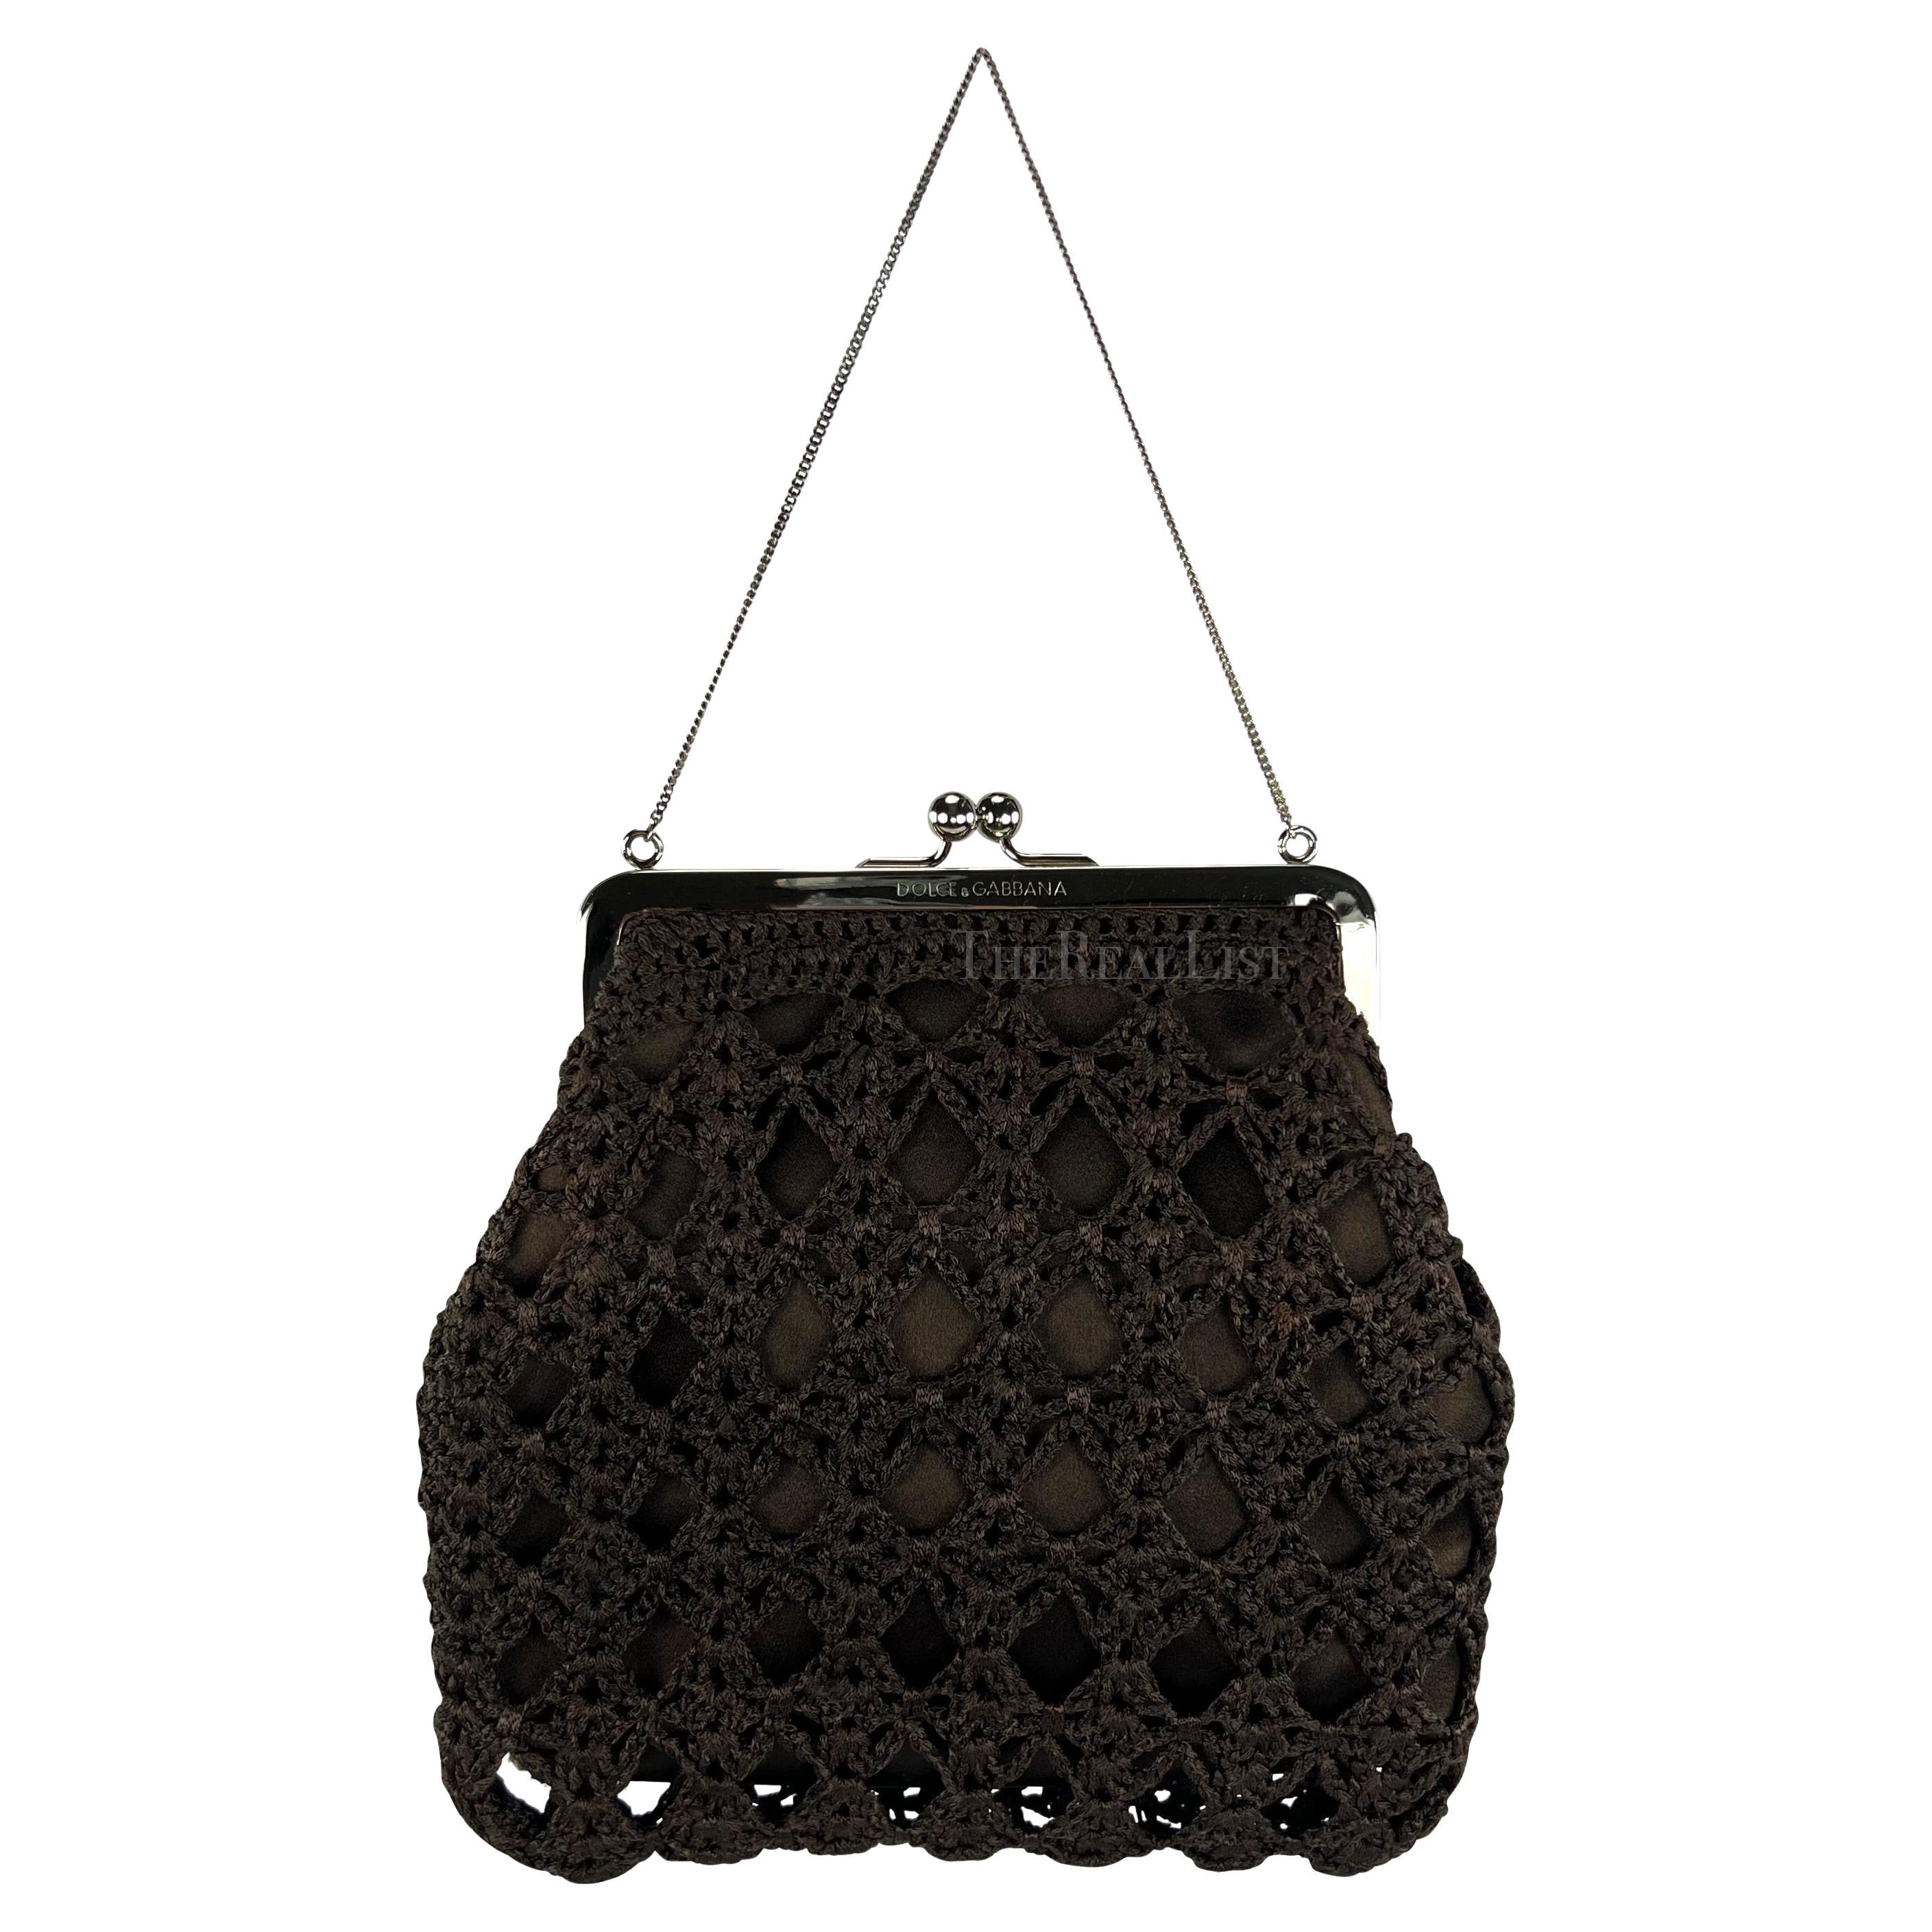 S/S 1997 Dolce & Gabbana Bown Crochet Clam Closure Mini Evening Bag For Sale